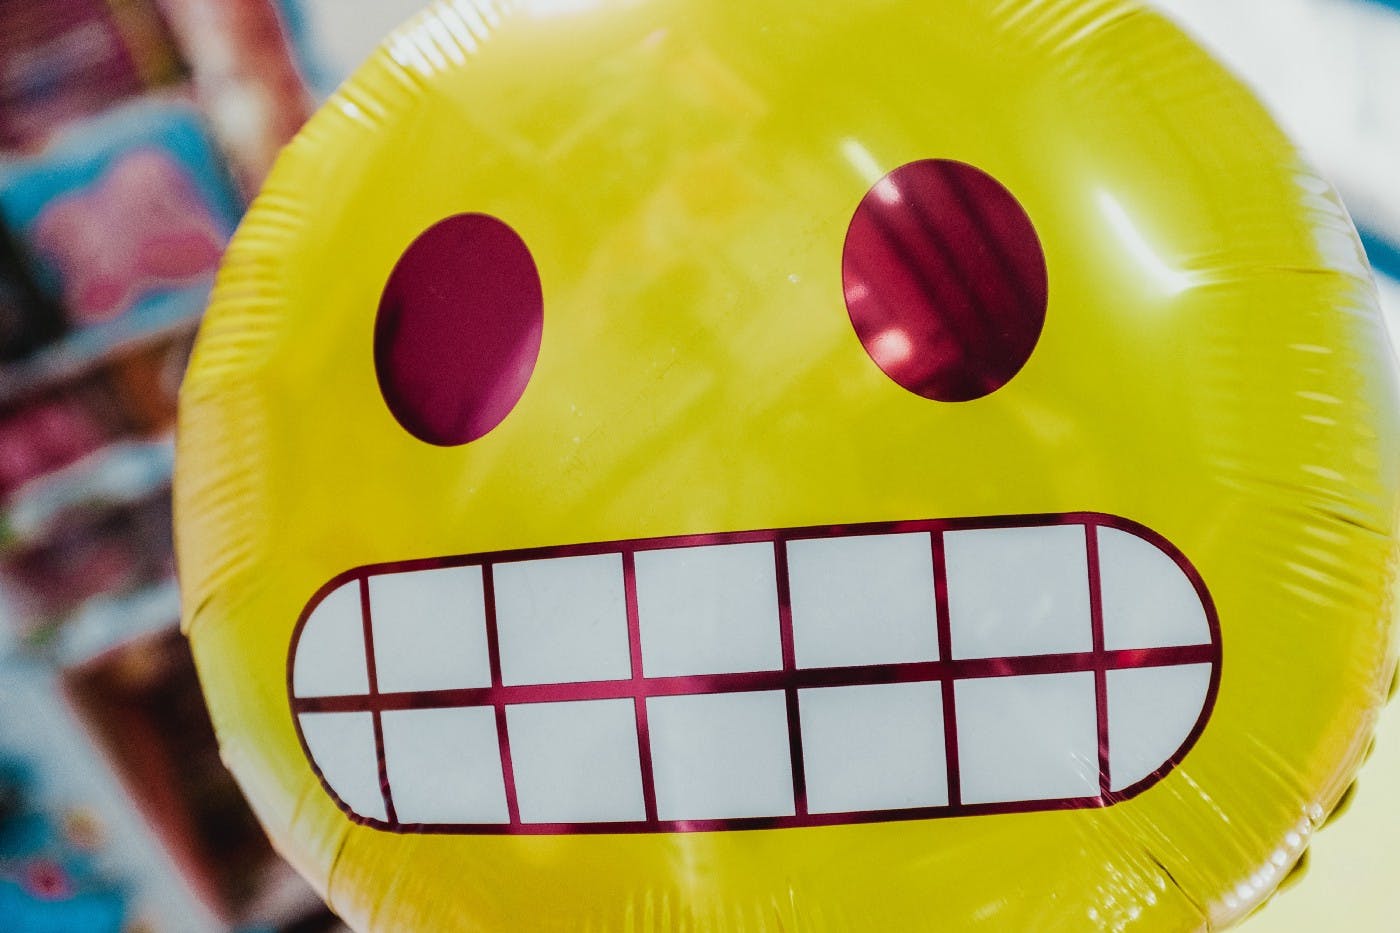 An image of a grimacing face emoji